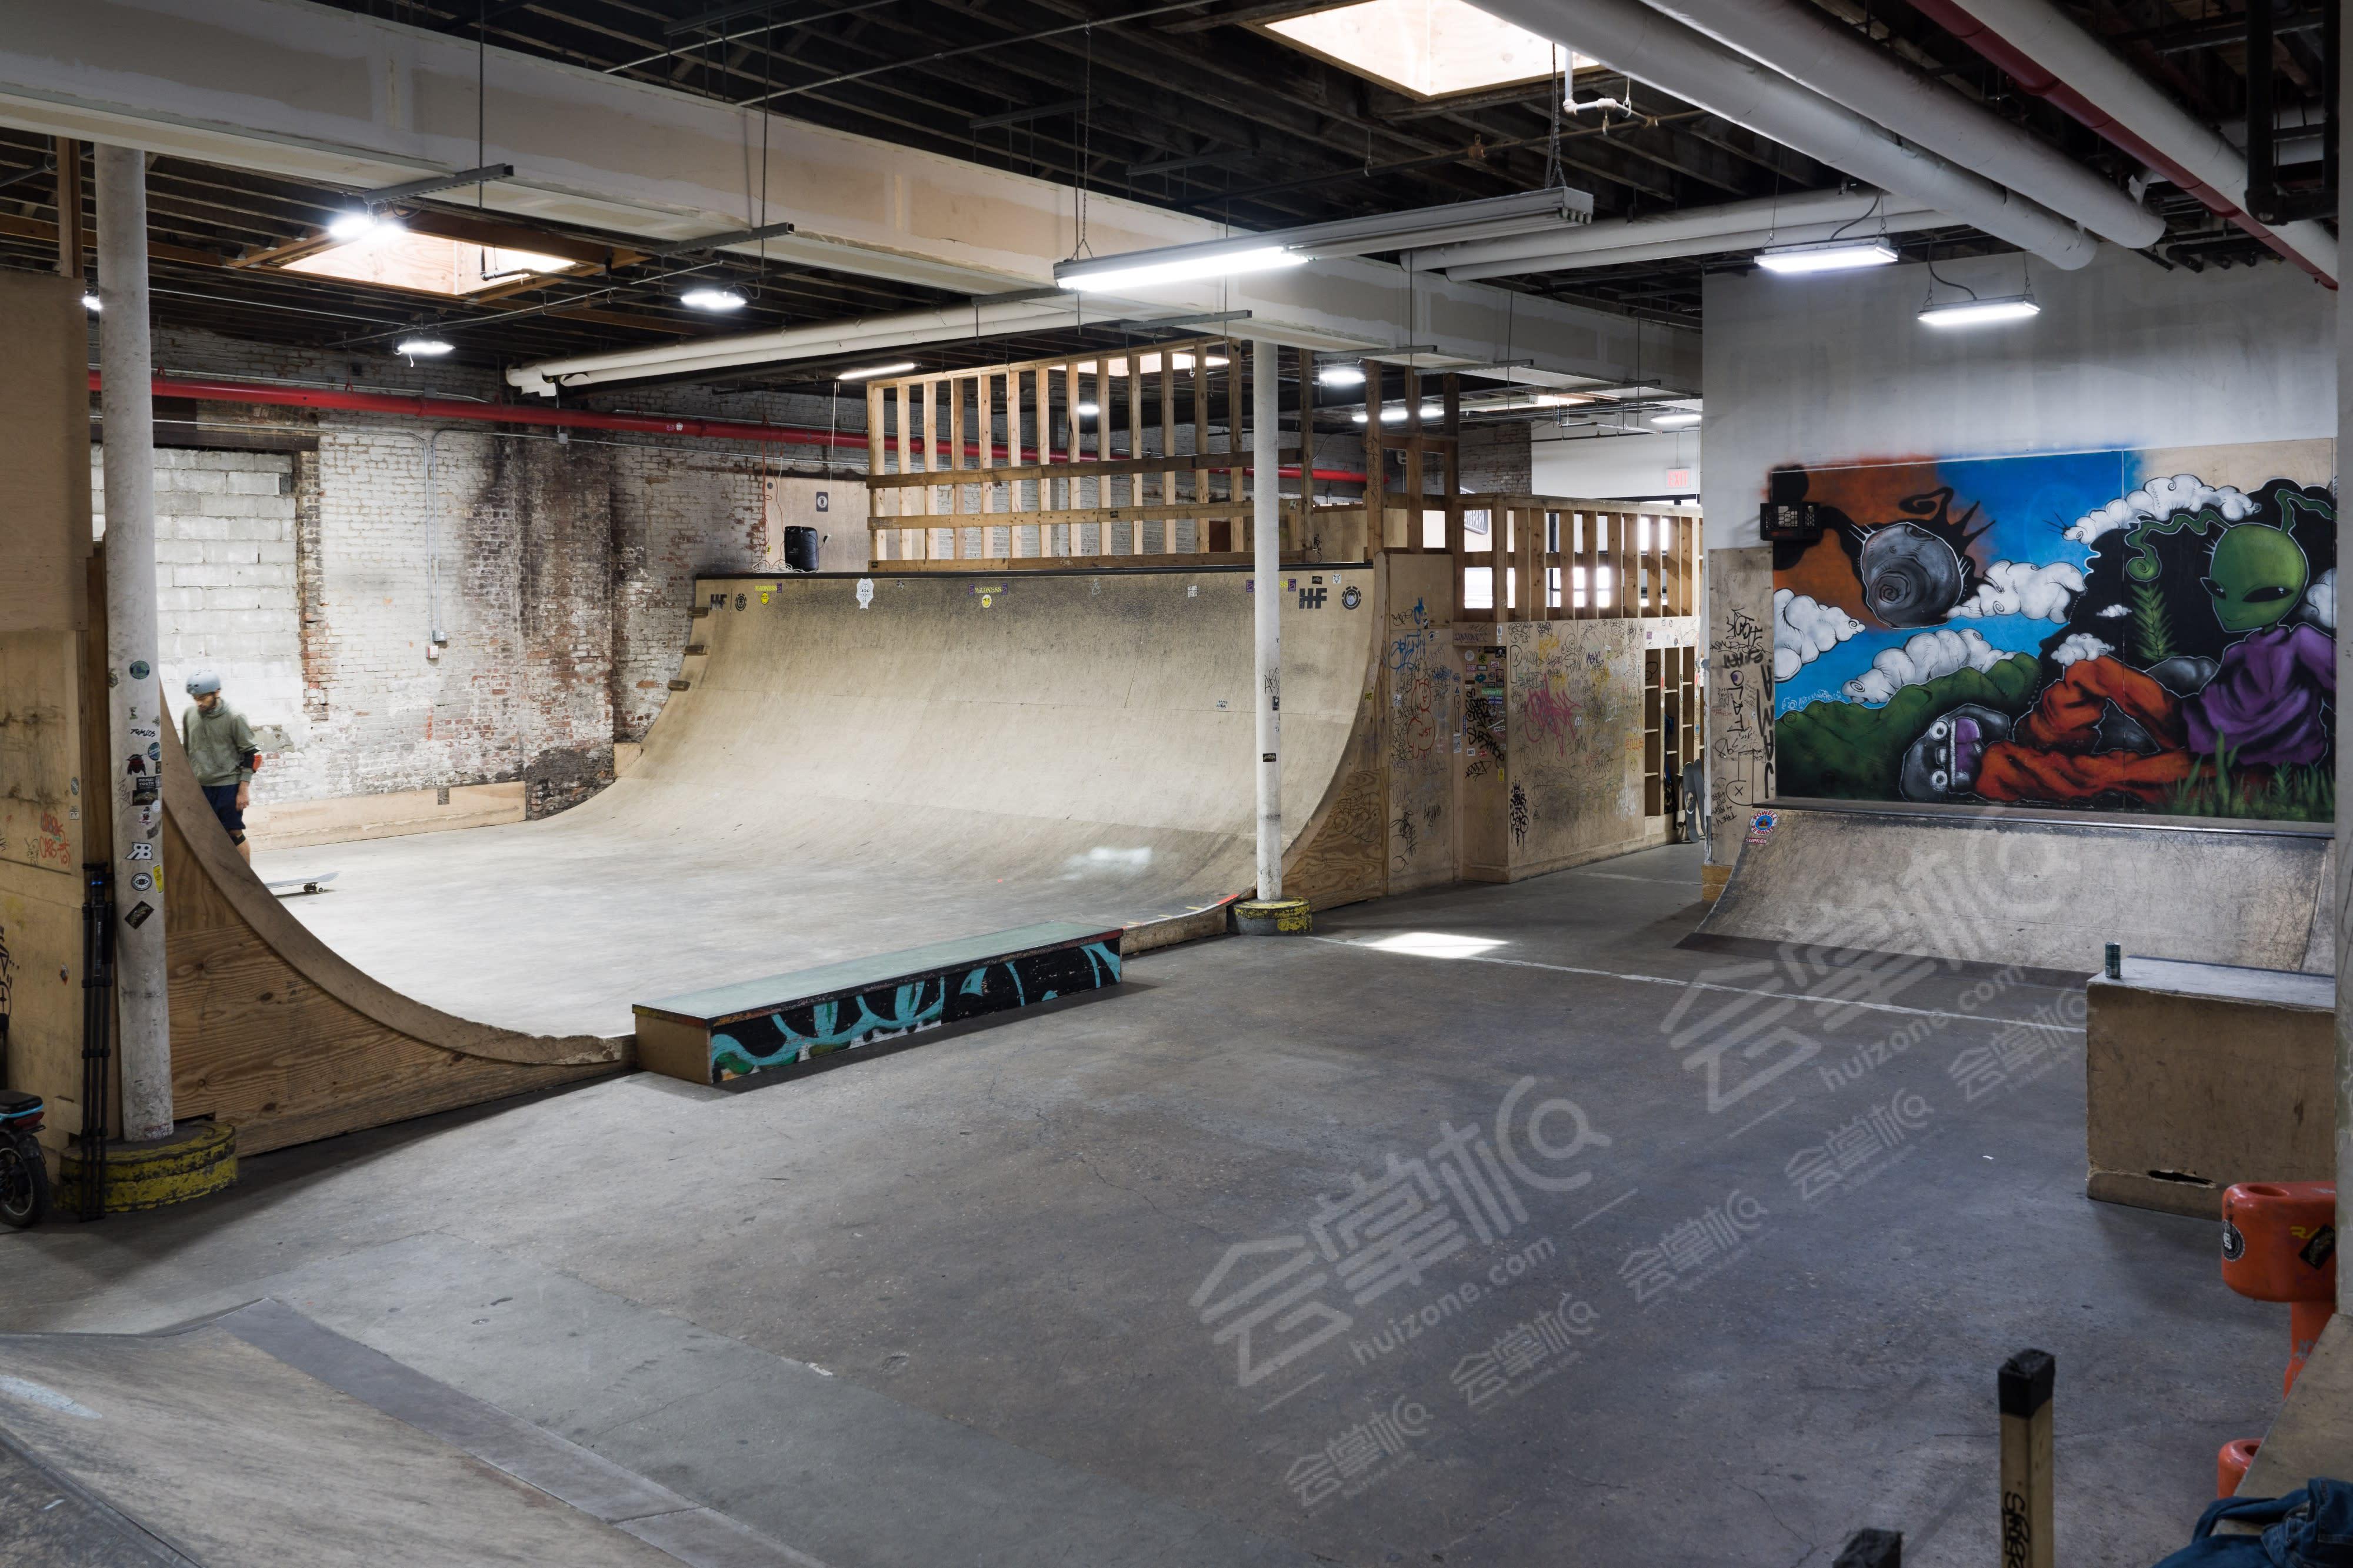 INDOOR SKATEPARK  - the only indoor skatepark in hip East Williamsburg